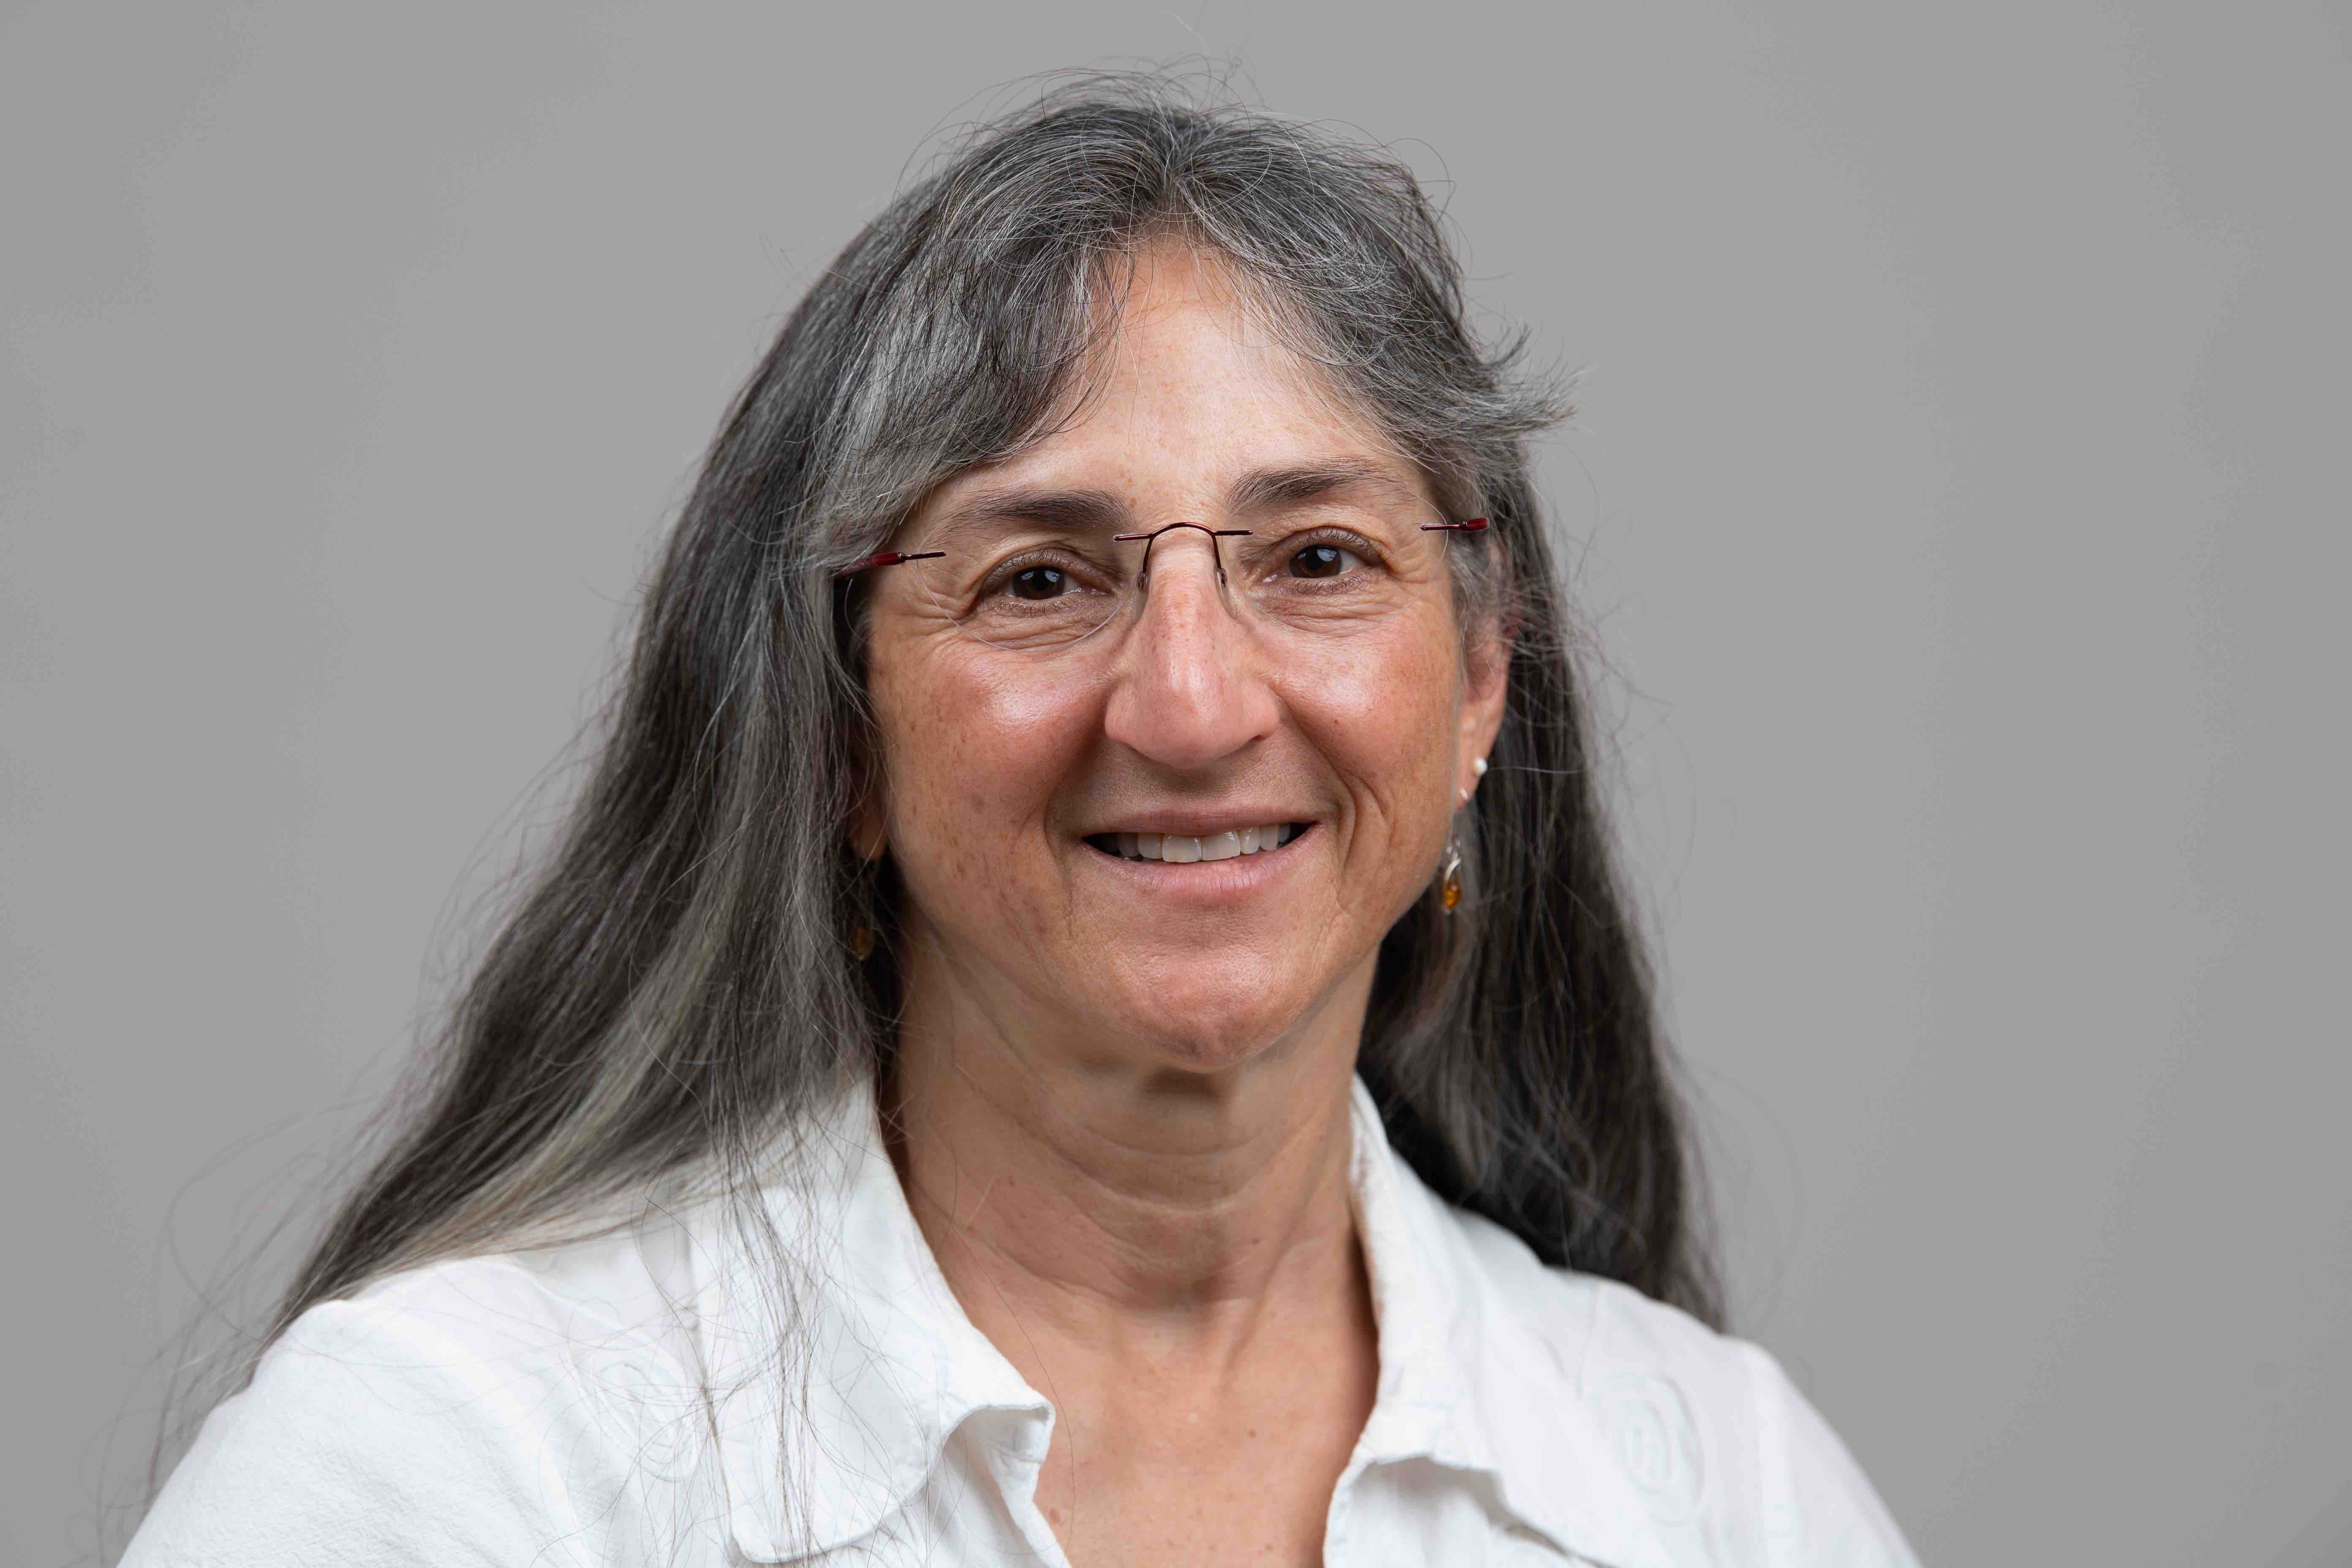 Nancy Levinger is a Colorado State University professor.